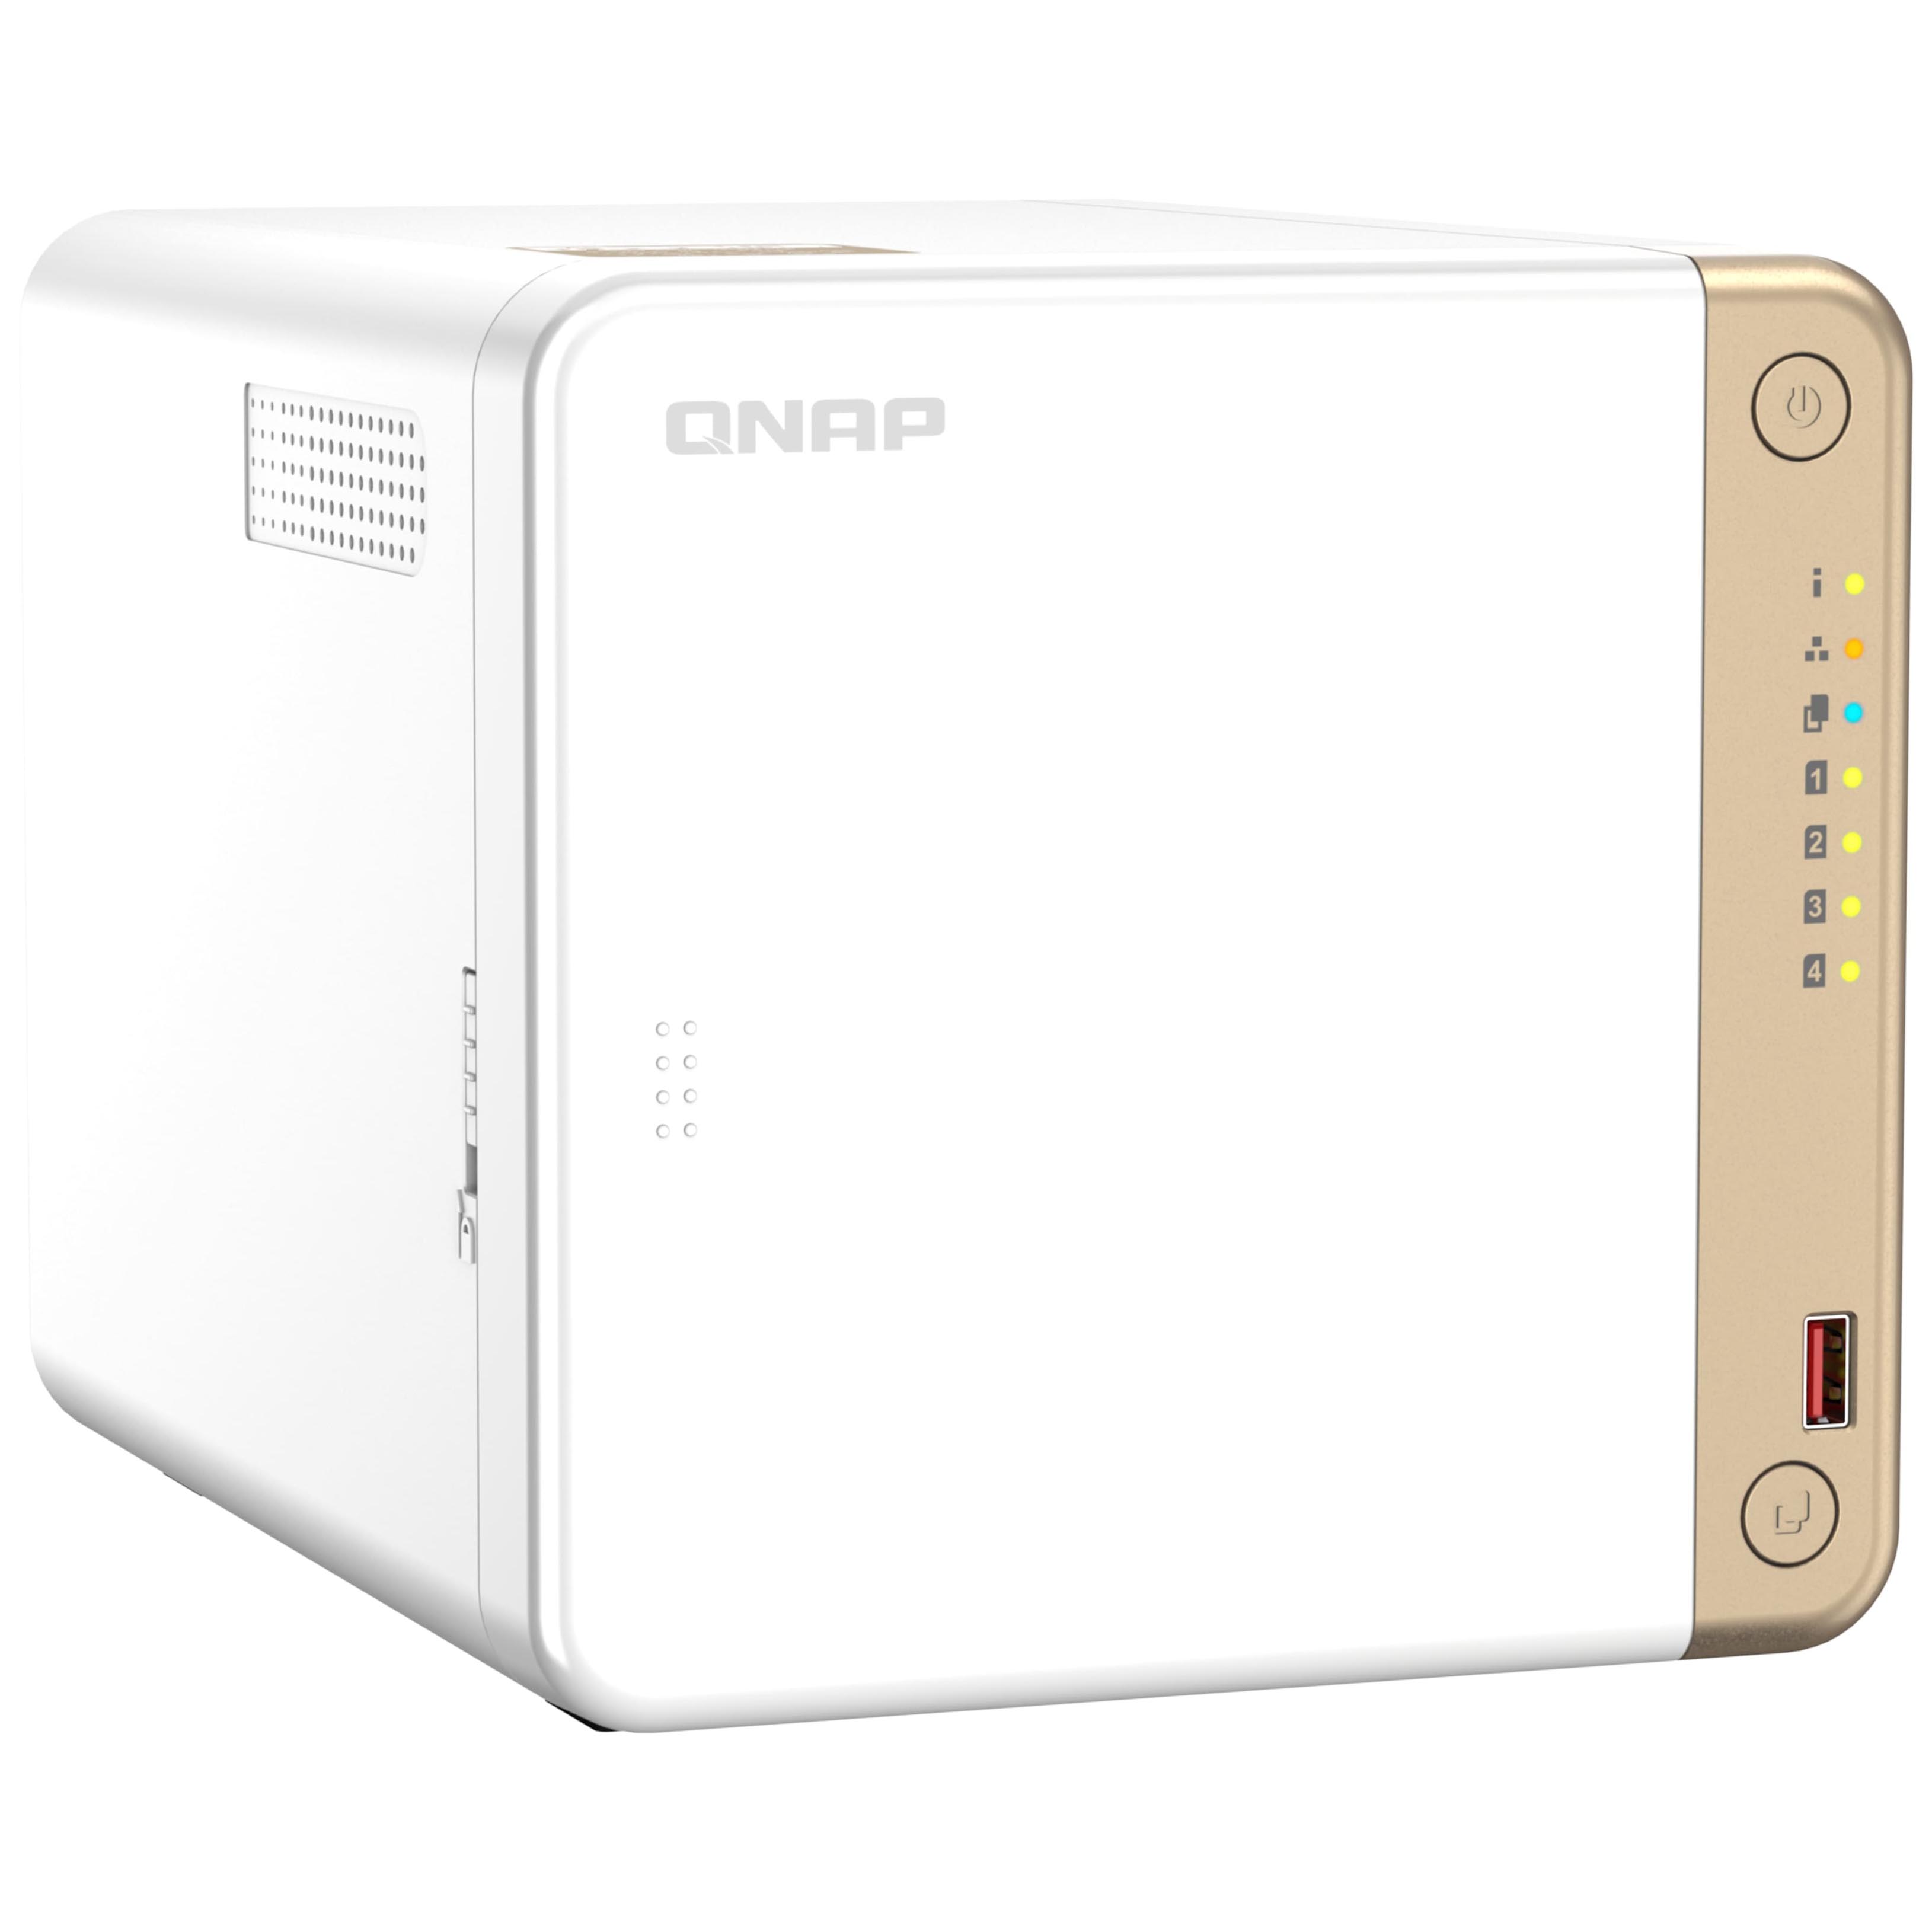 Сетевое хранилище QNAP TS-462 Nas, 4 отсека, без дисков, белый сетевое хранилище nas qnap hs 264 8g